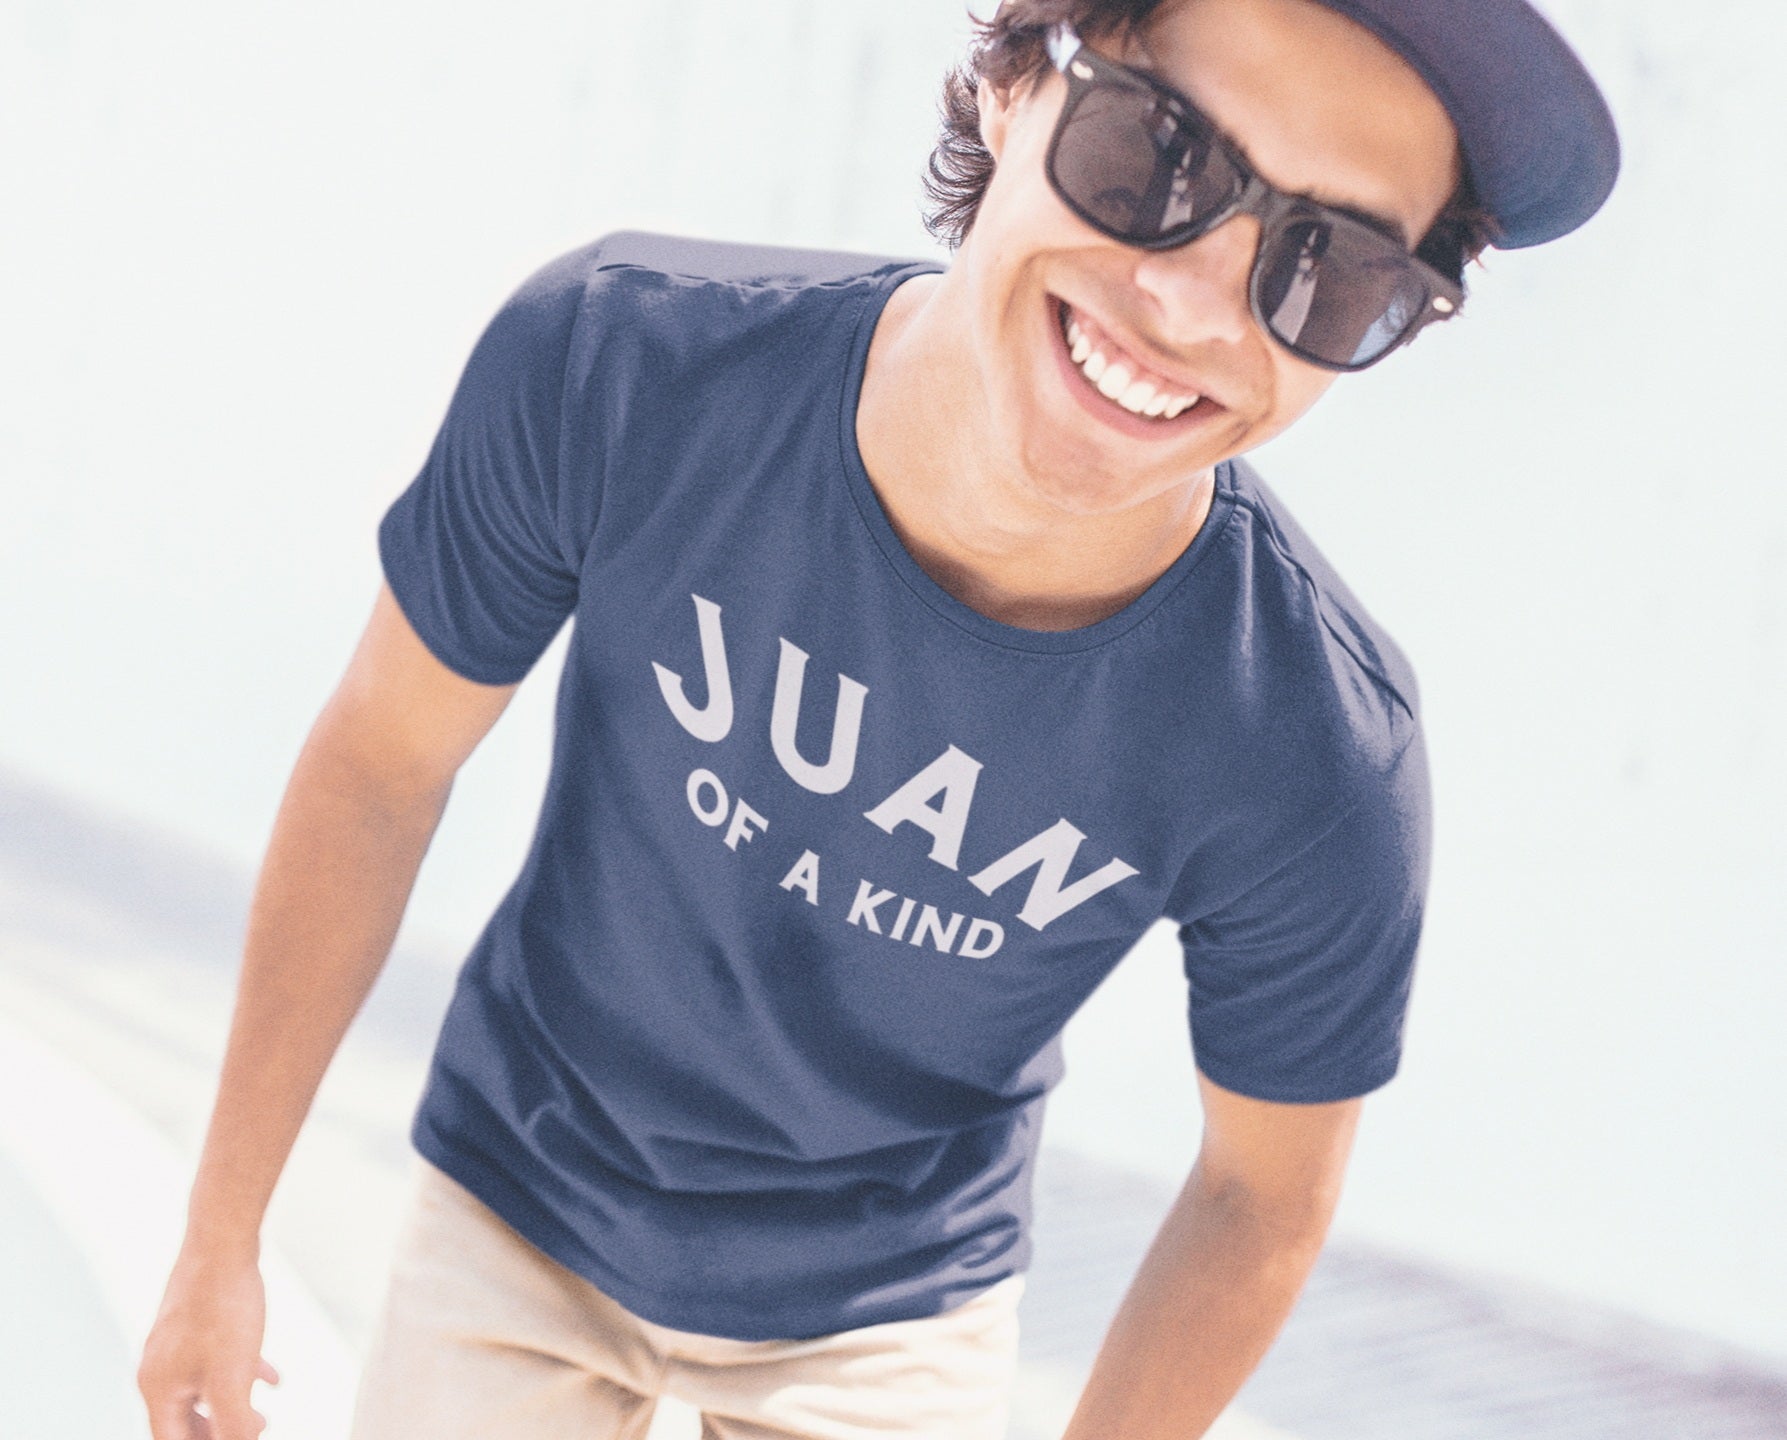 Juan Of A Kind Men's T-Shirt